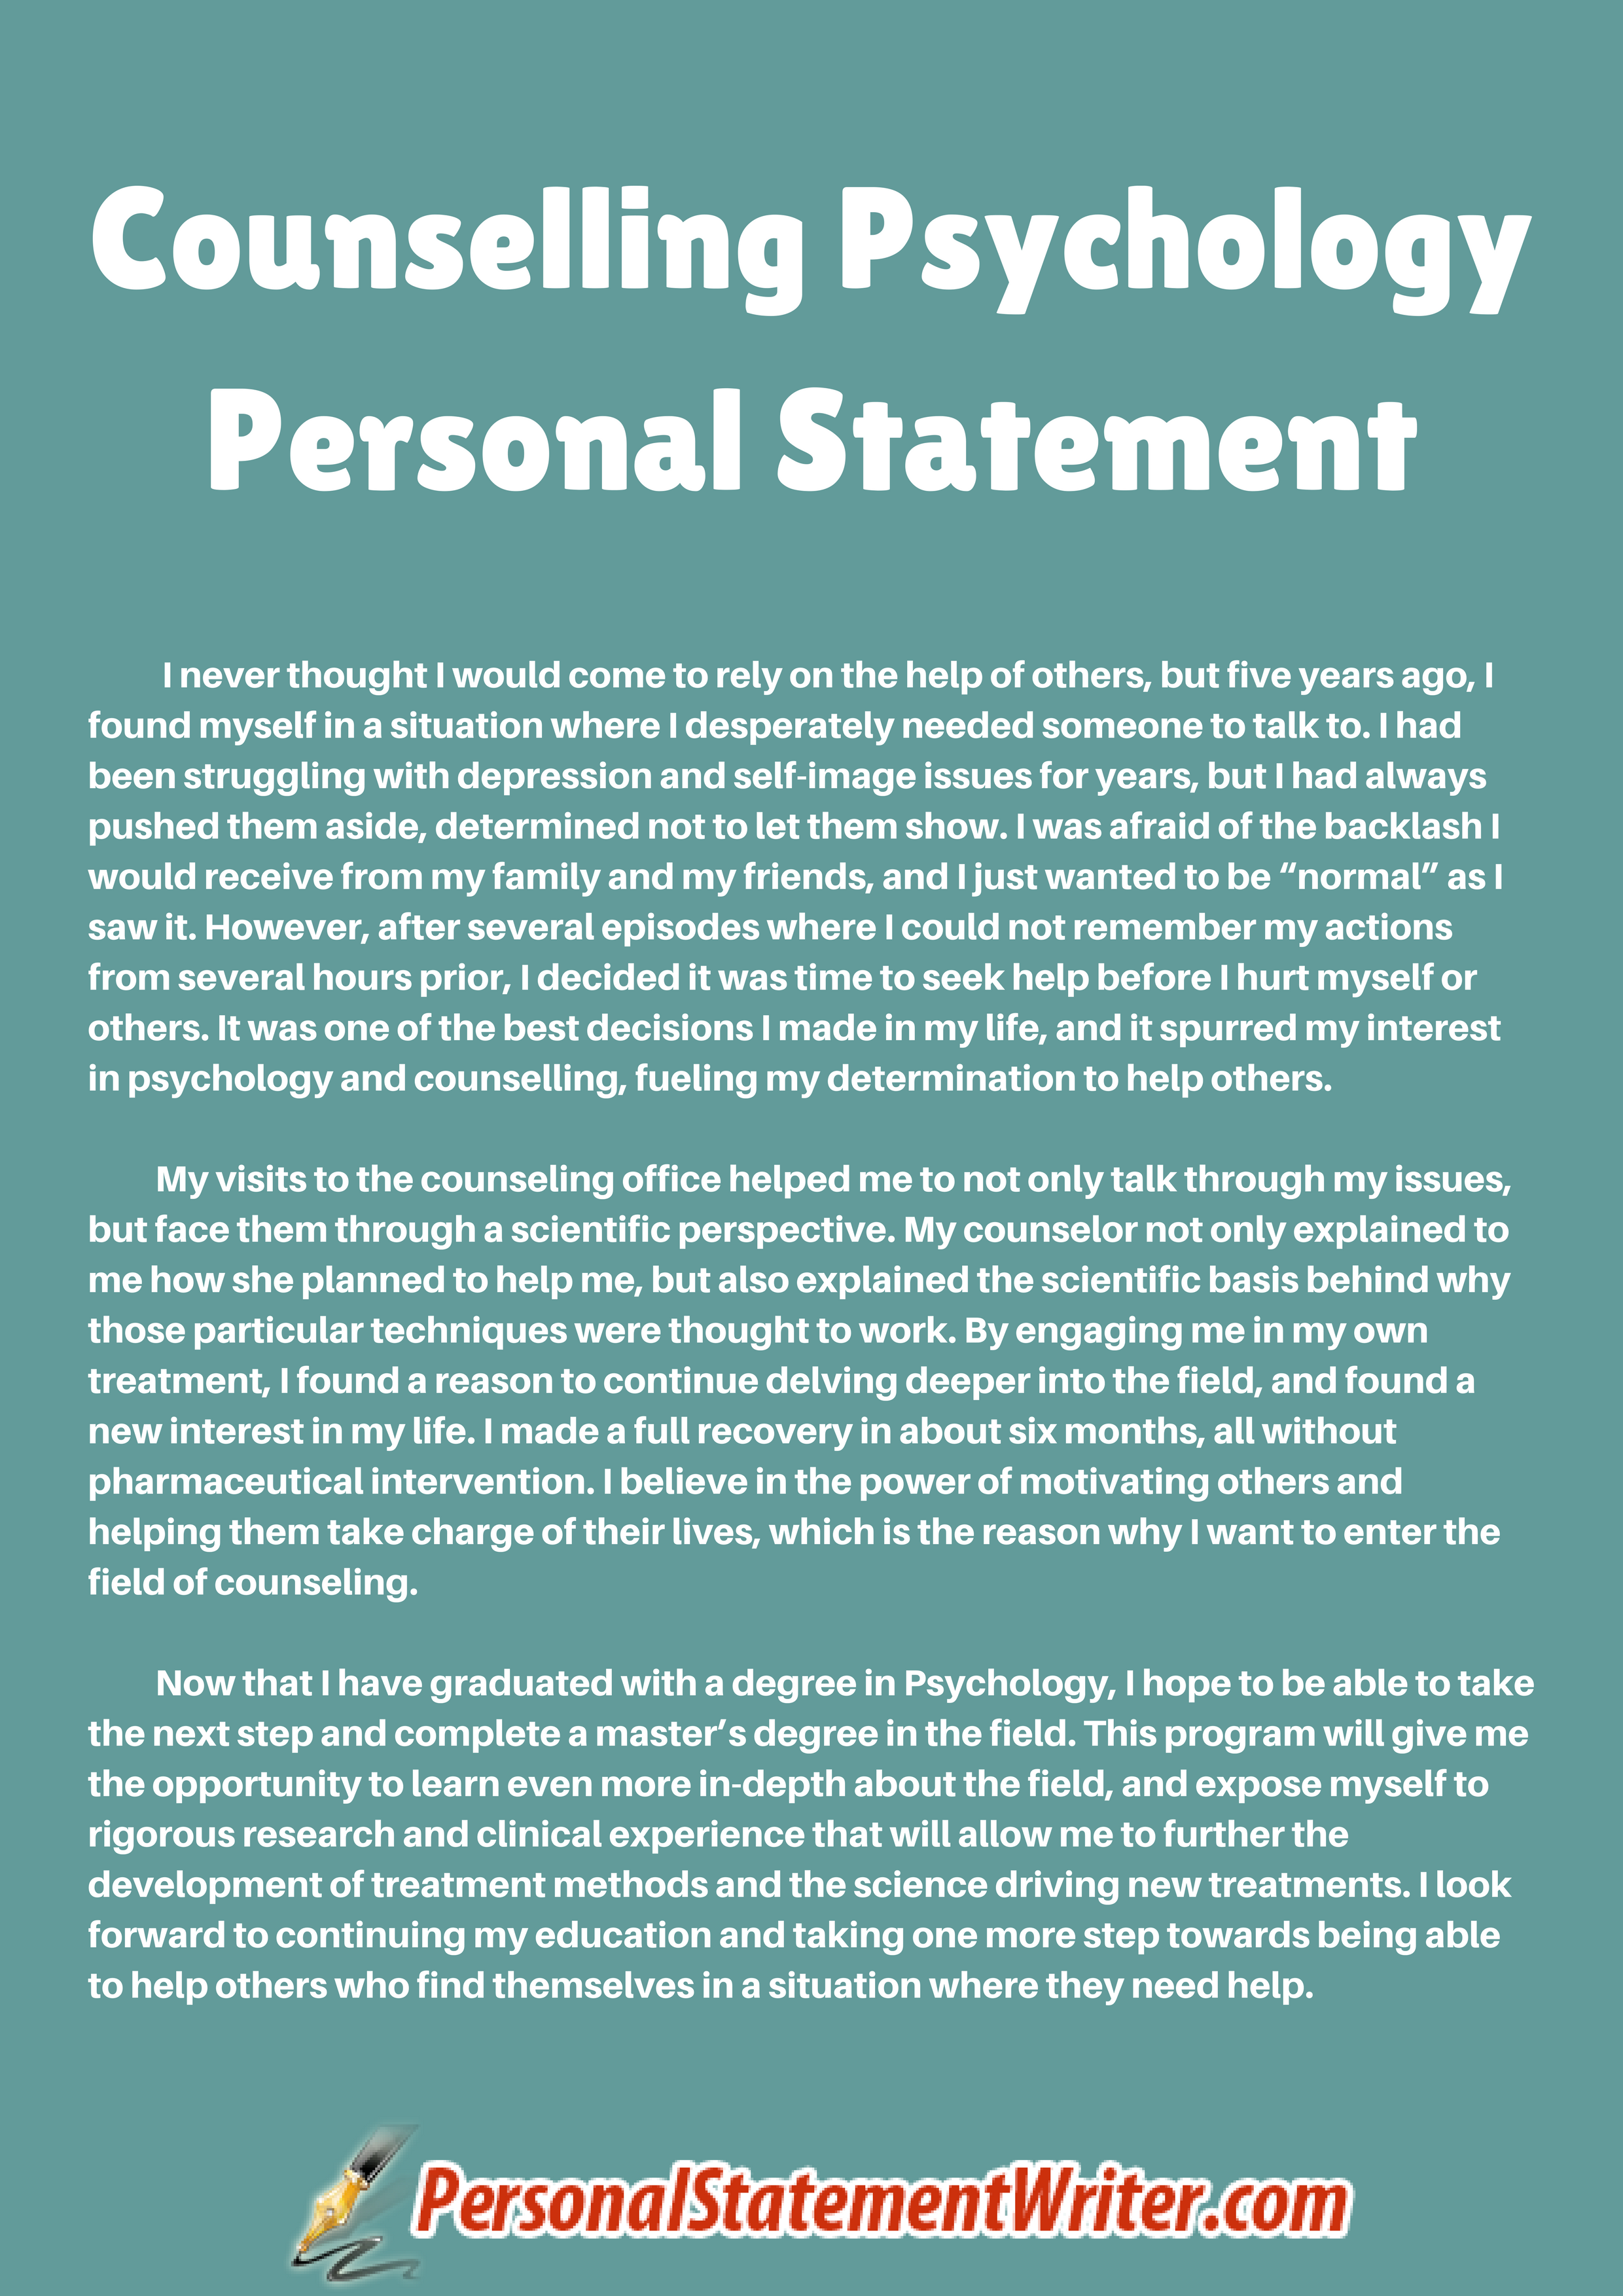 band 6 speech and language therapist personal statement